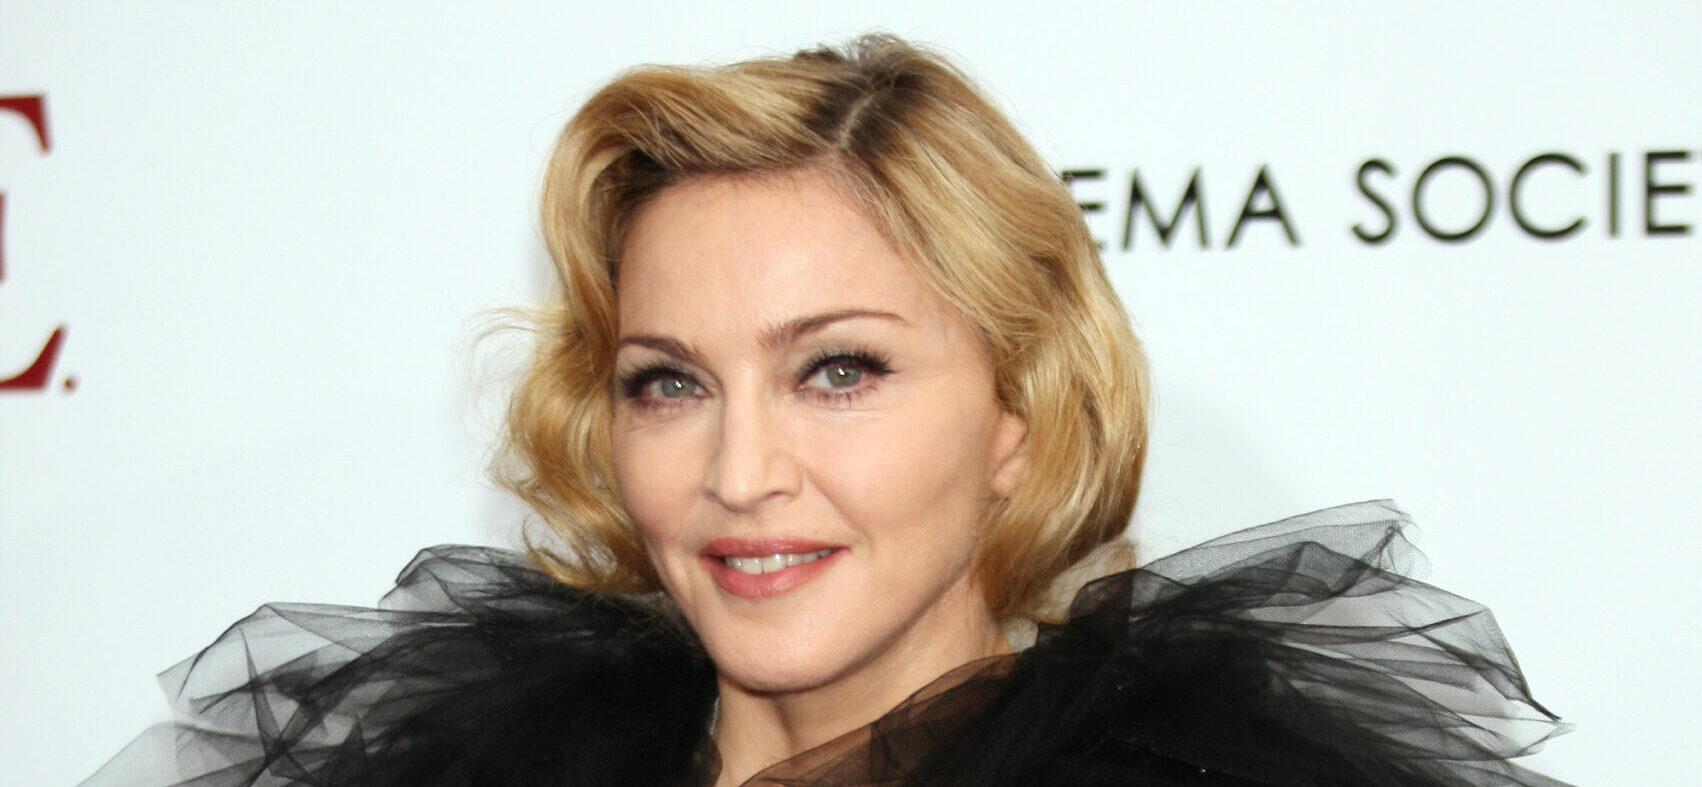 Madonna smiling